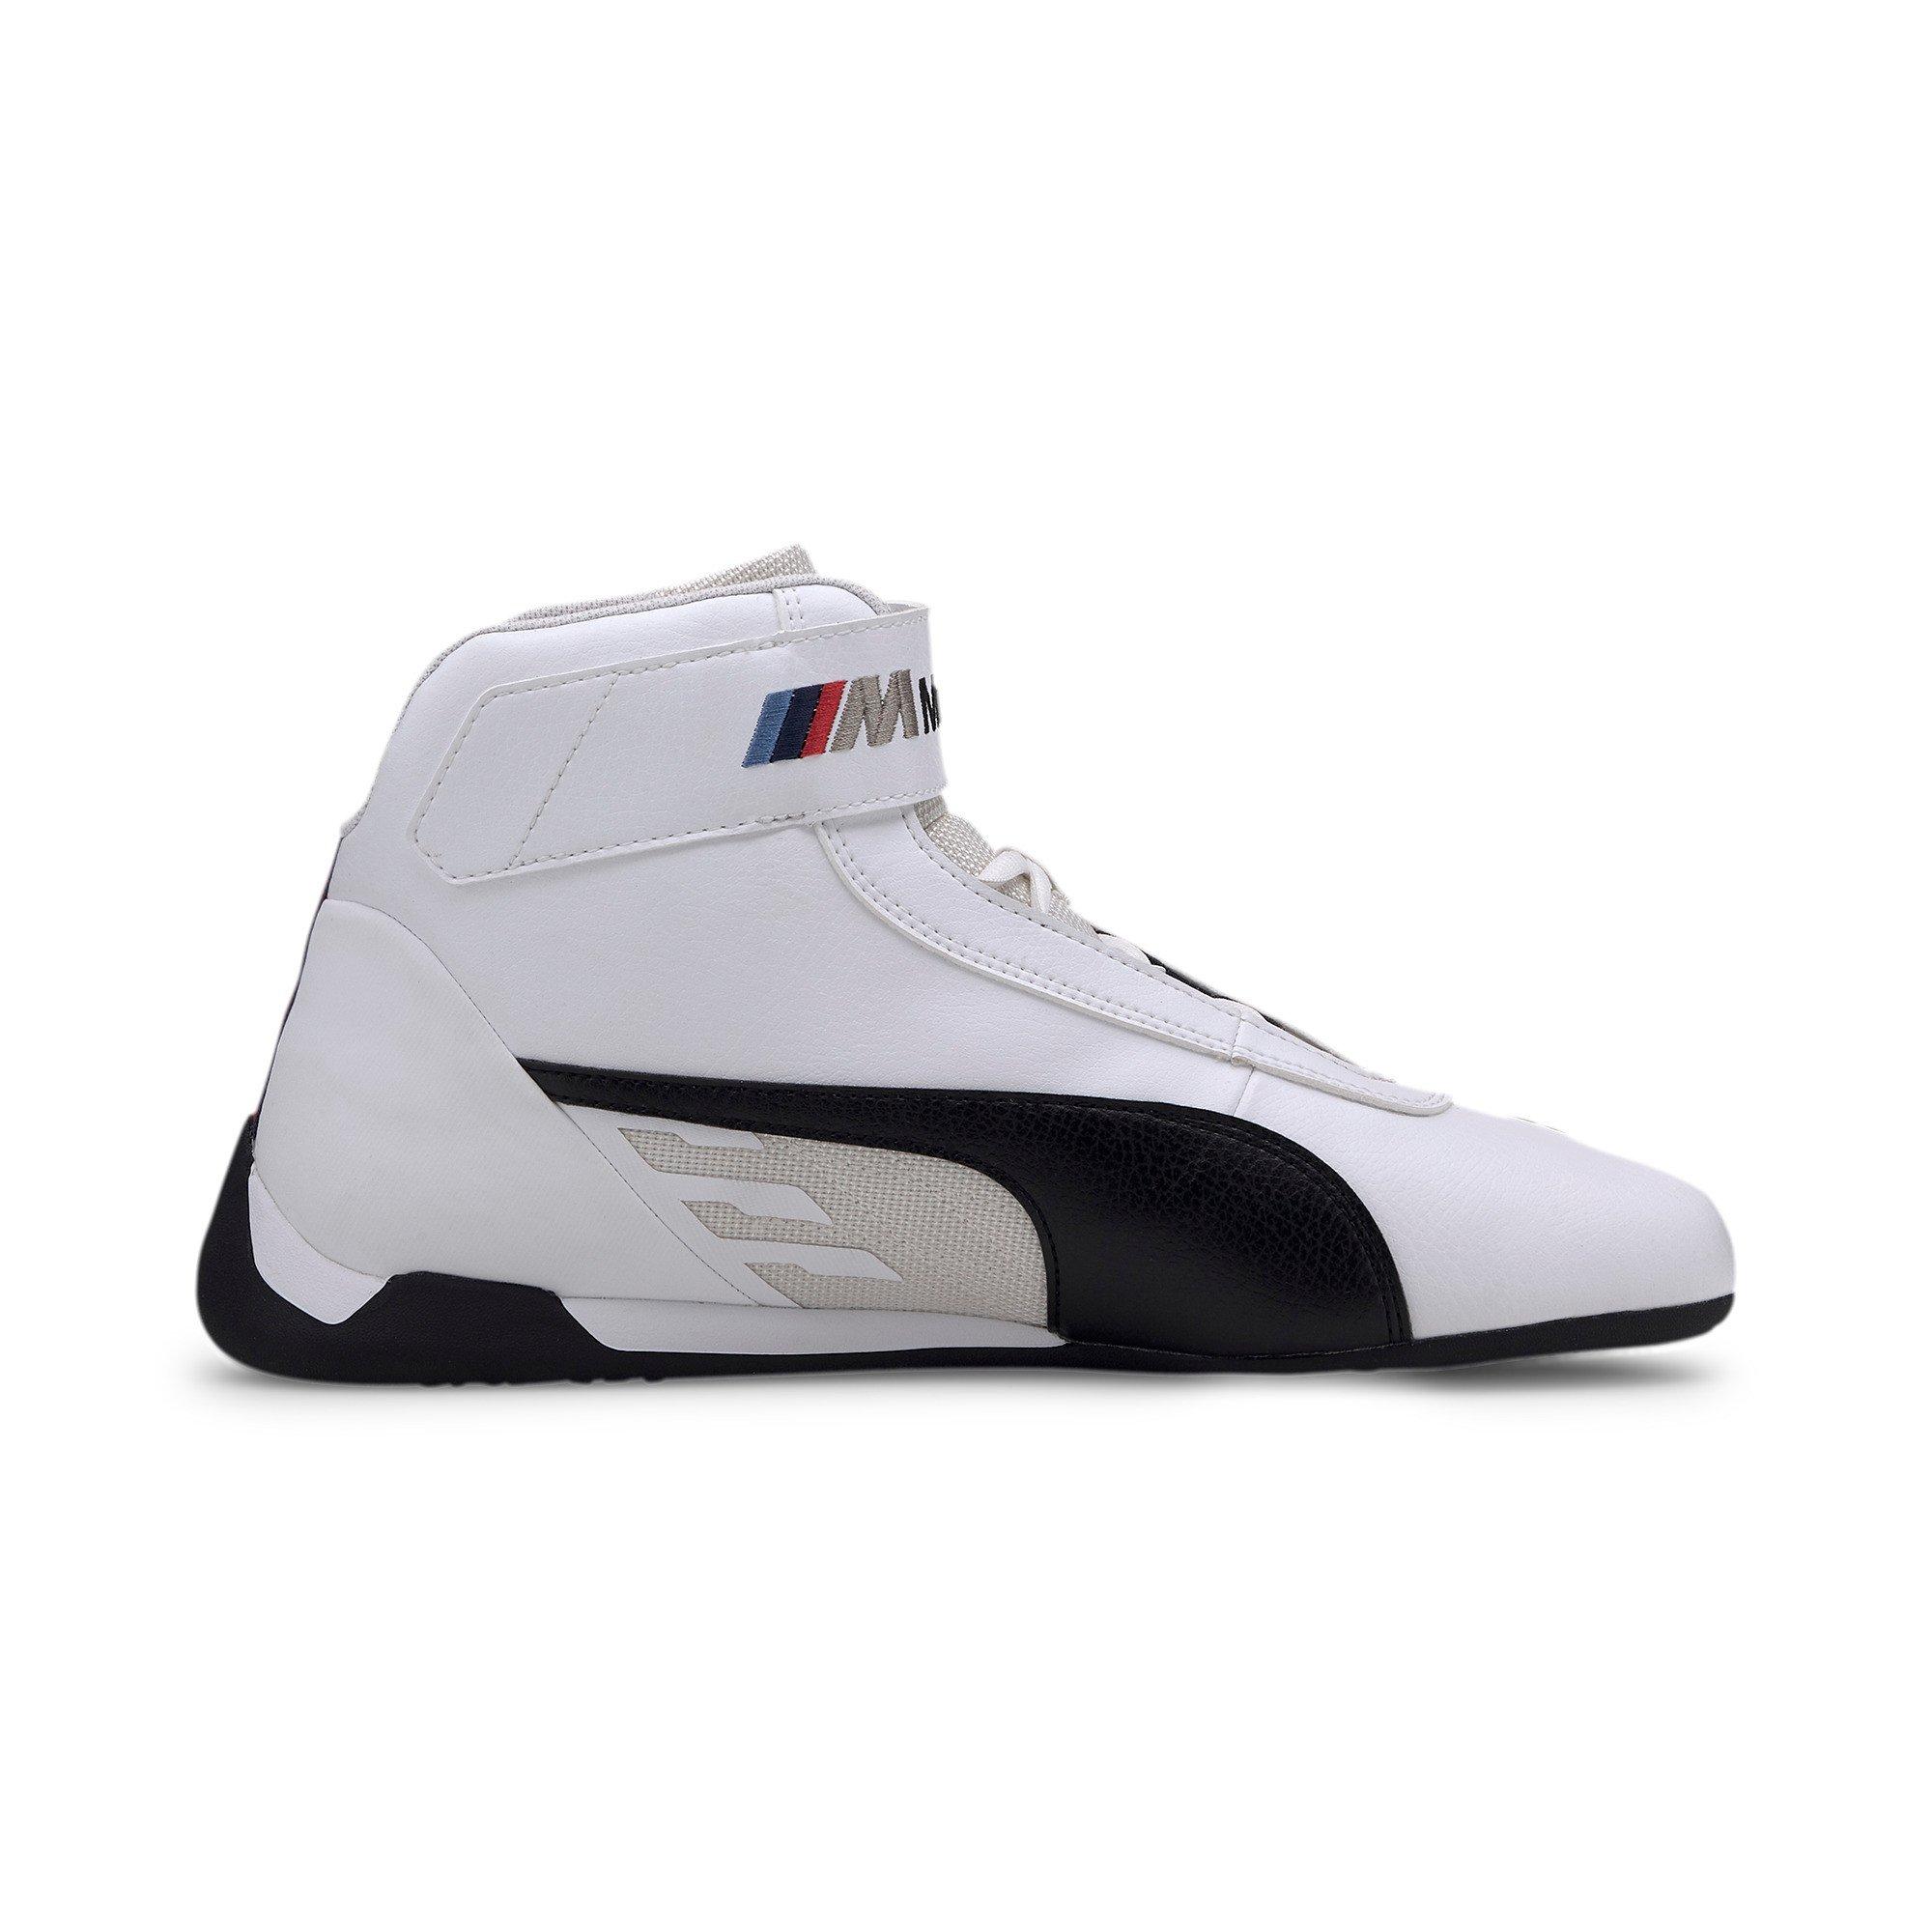 white puma bmw motorsport shoes for Men Size 11.5